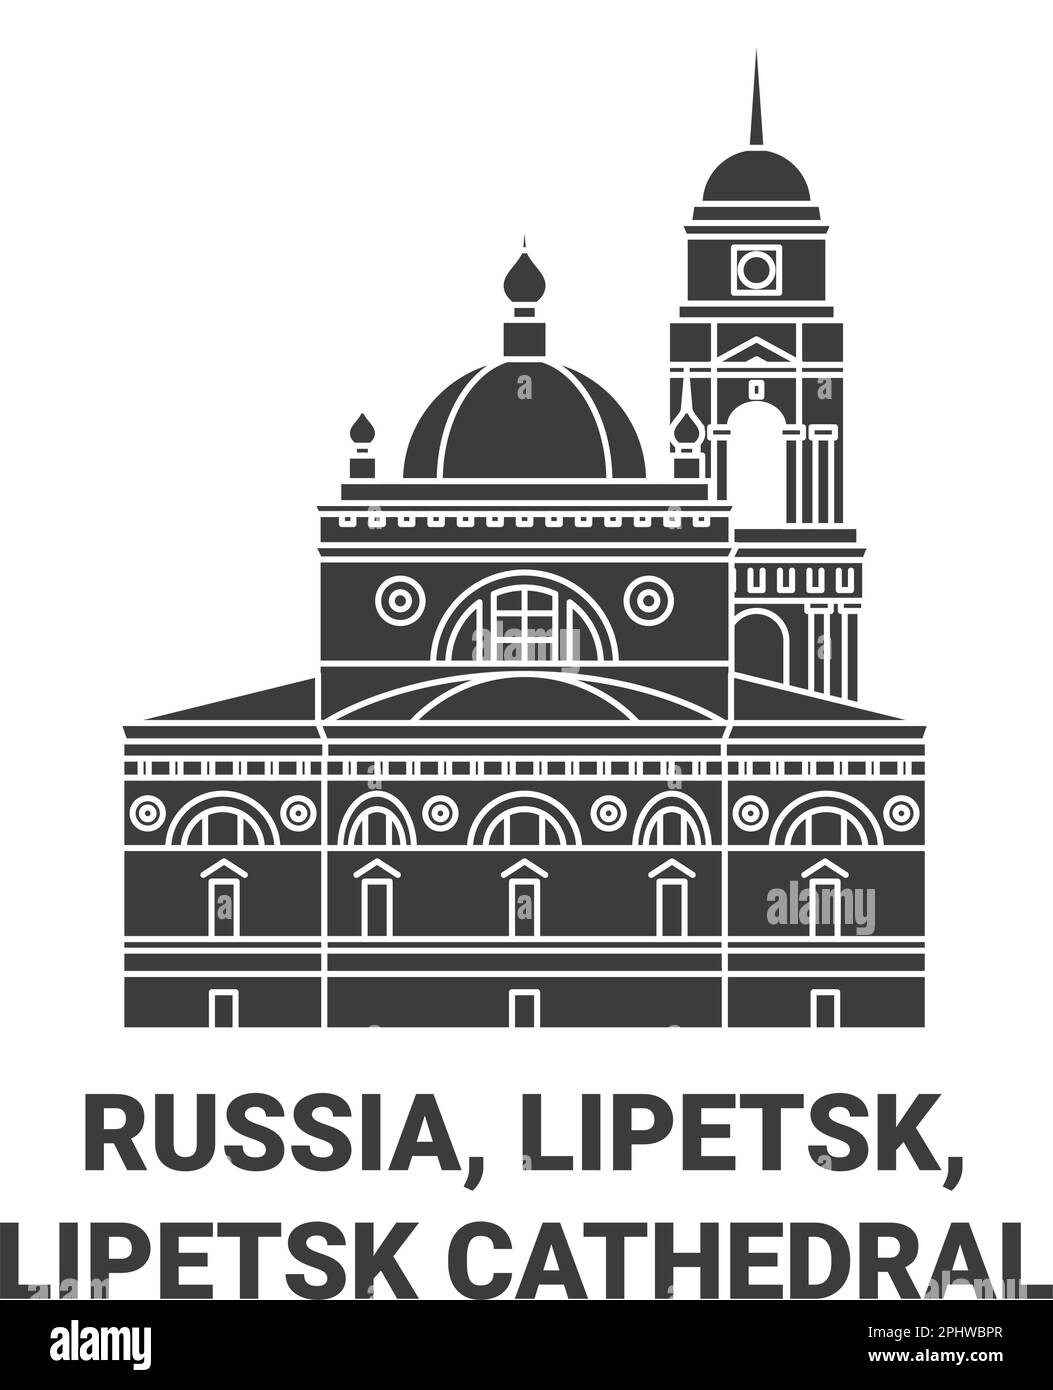 Russia, Lipetsk, Lipetsk Cathedral travel landmark vector illustration Stock Vector